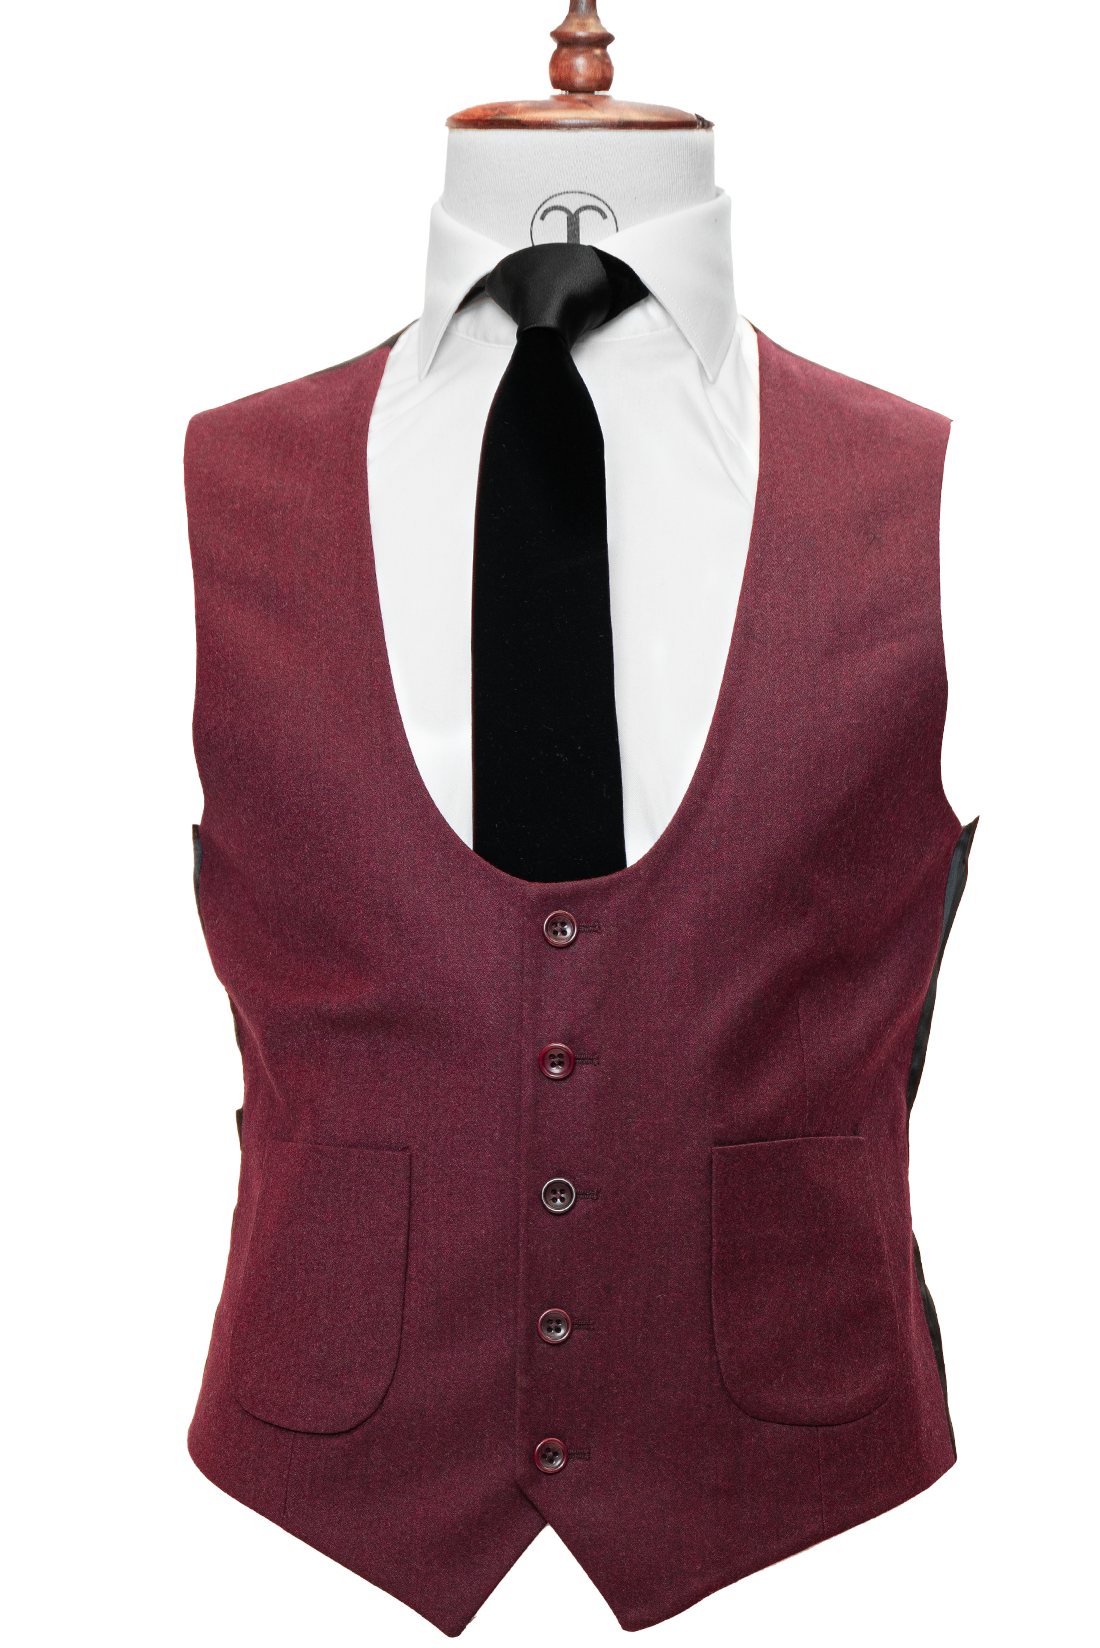 Zignone - Burgundy Cashmere 3-Piece Fit Slim Fit Suit with Patch Pockets